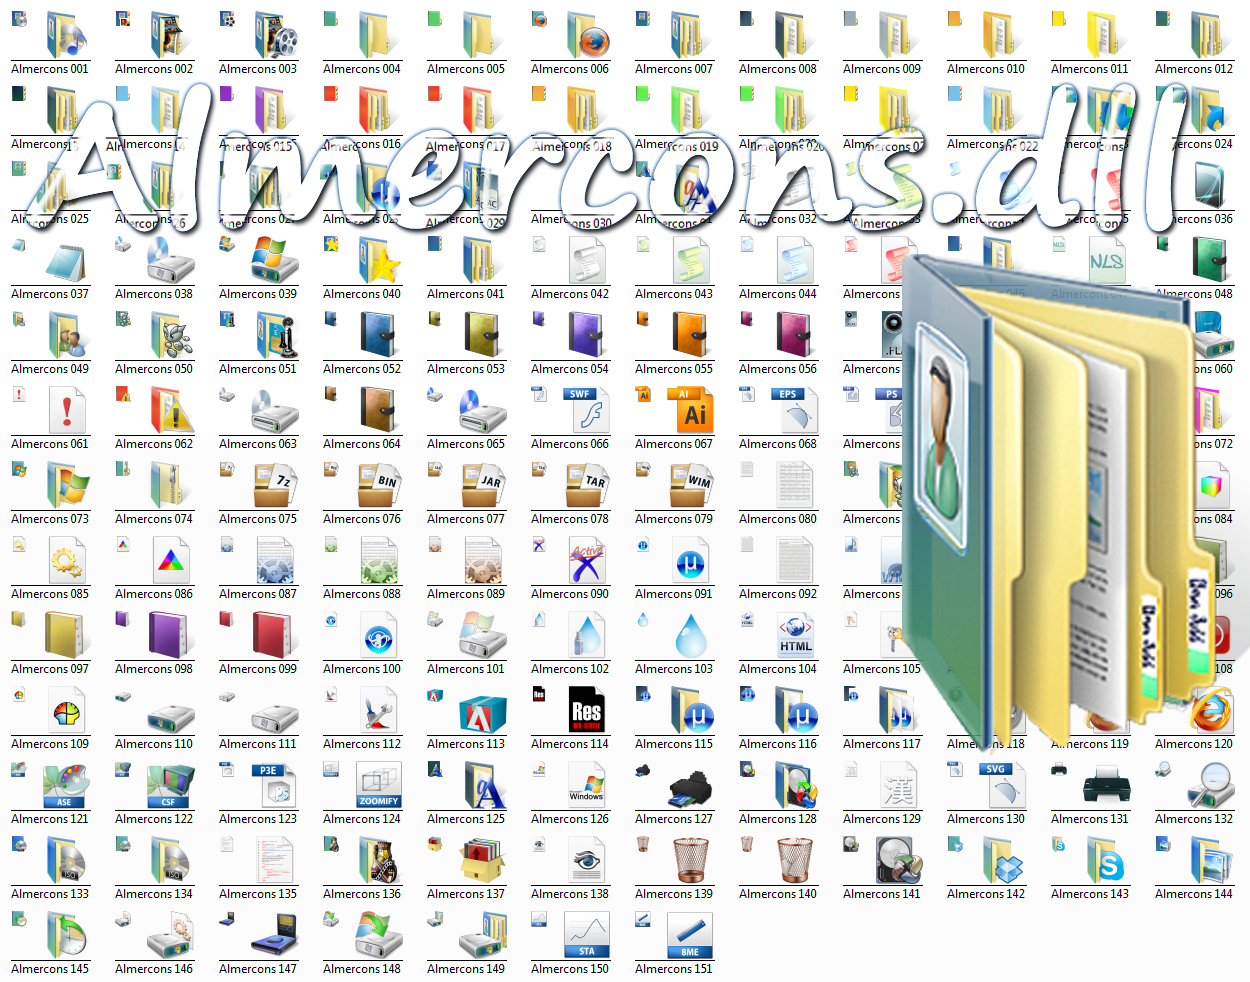 Windows 7 Icon Dll Files